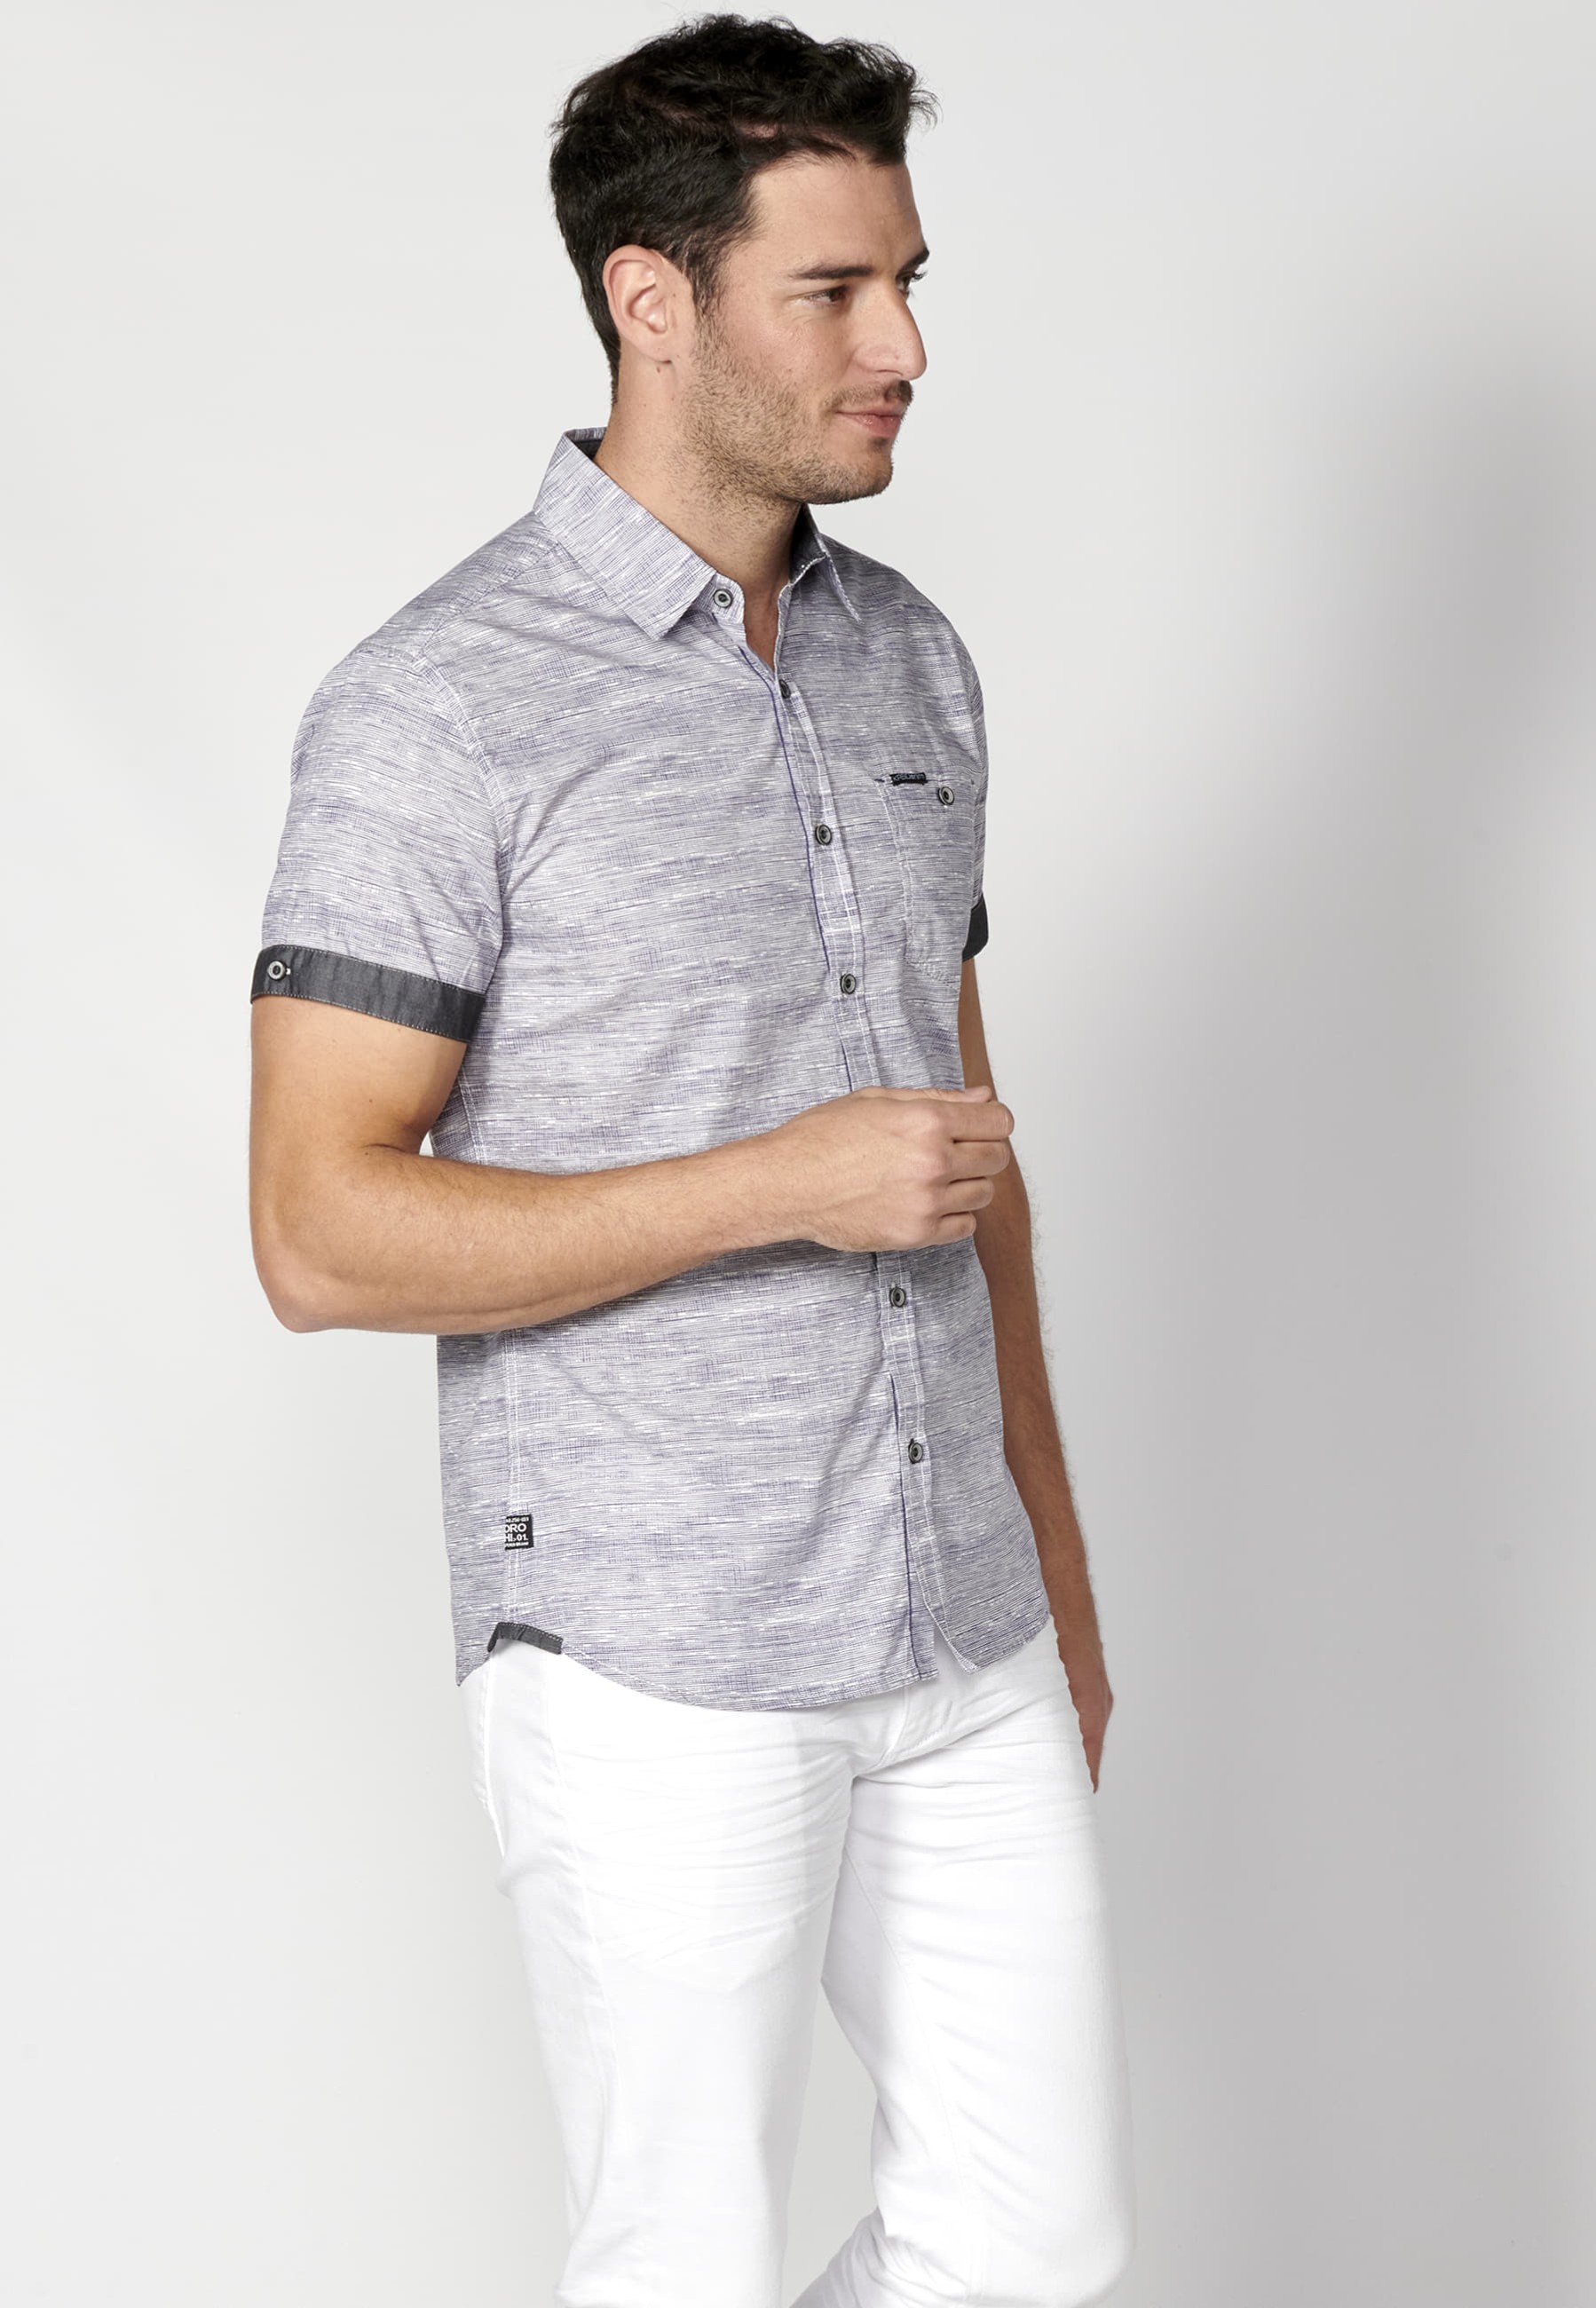 Blue short-sleeved cotton shirt for Men